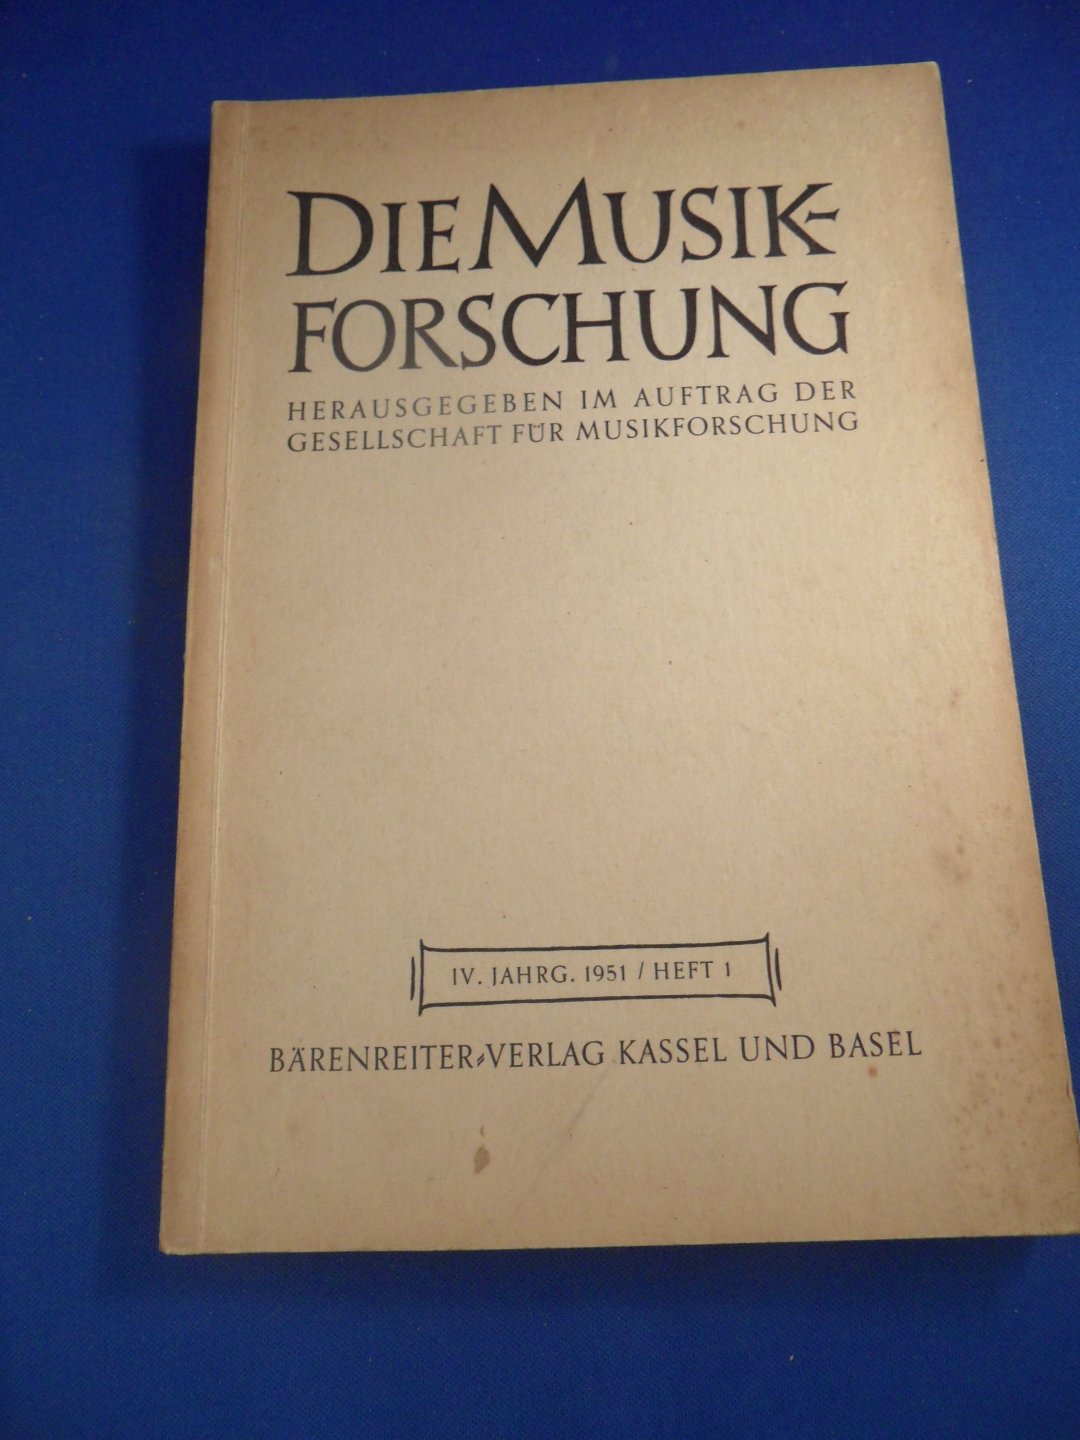  - Die Musikforschung. Herausgegeben von der Gesellschaft für Musikforschung. Jaargang IV, heft 1 1951